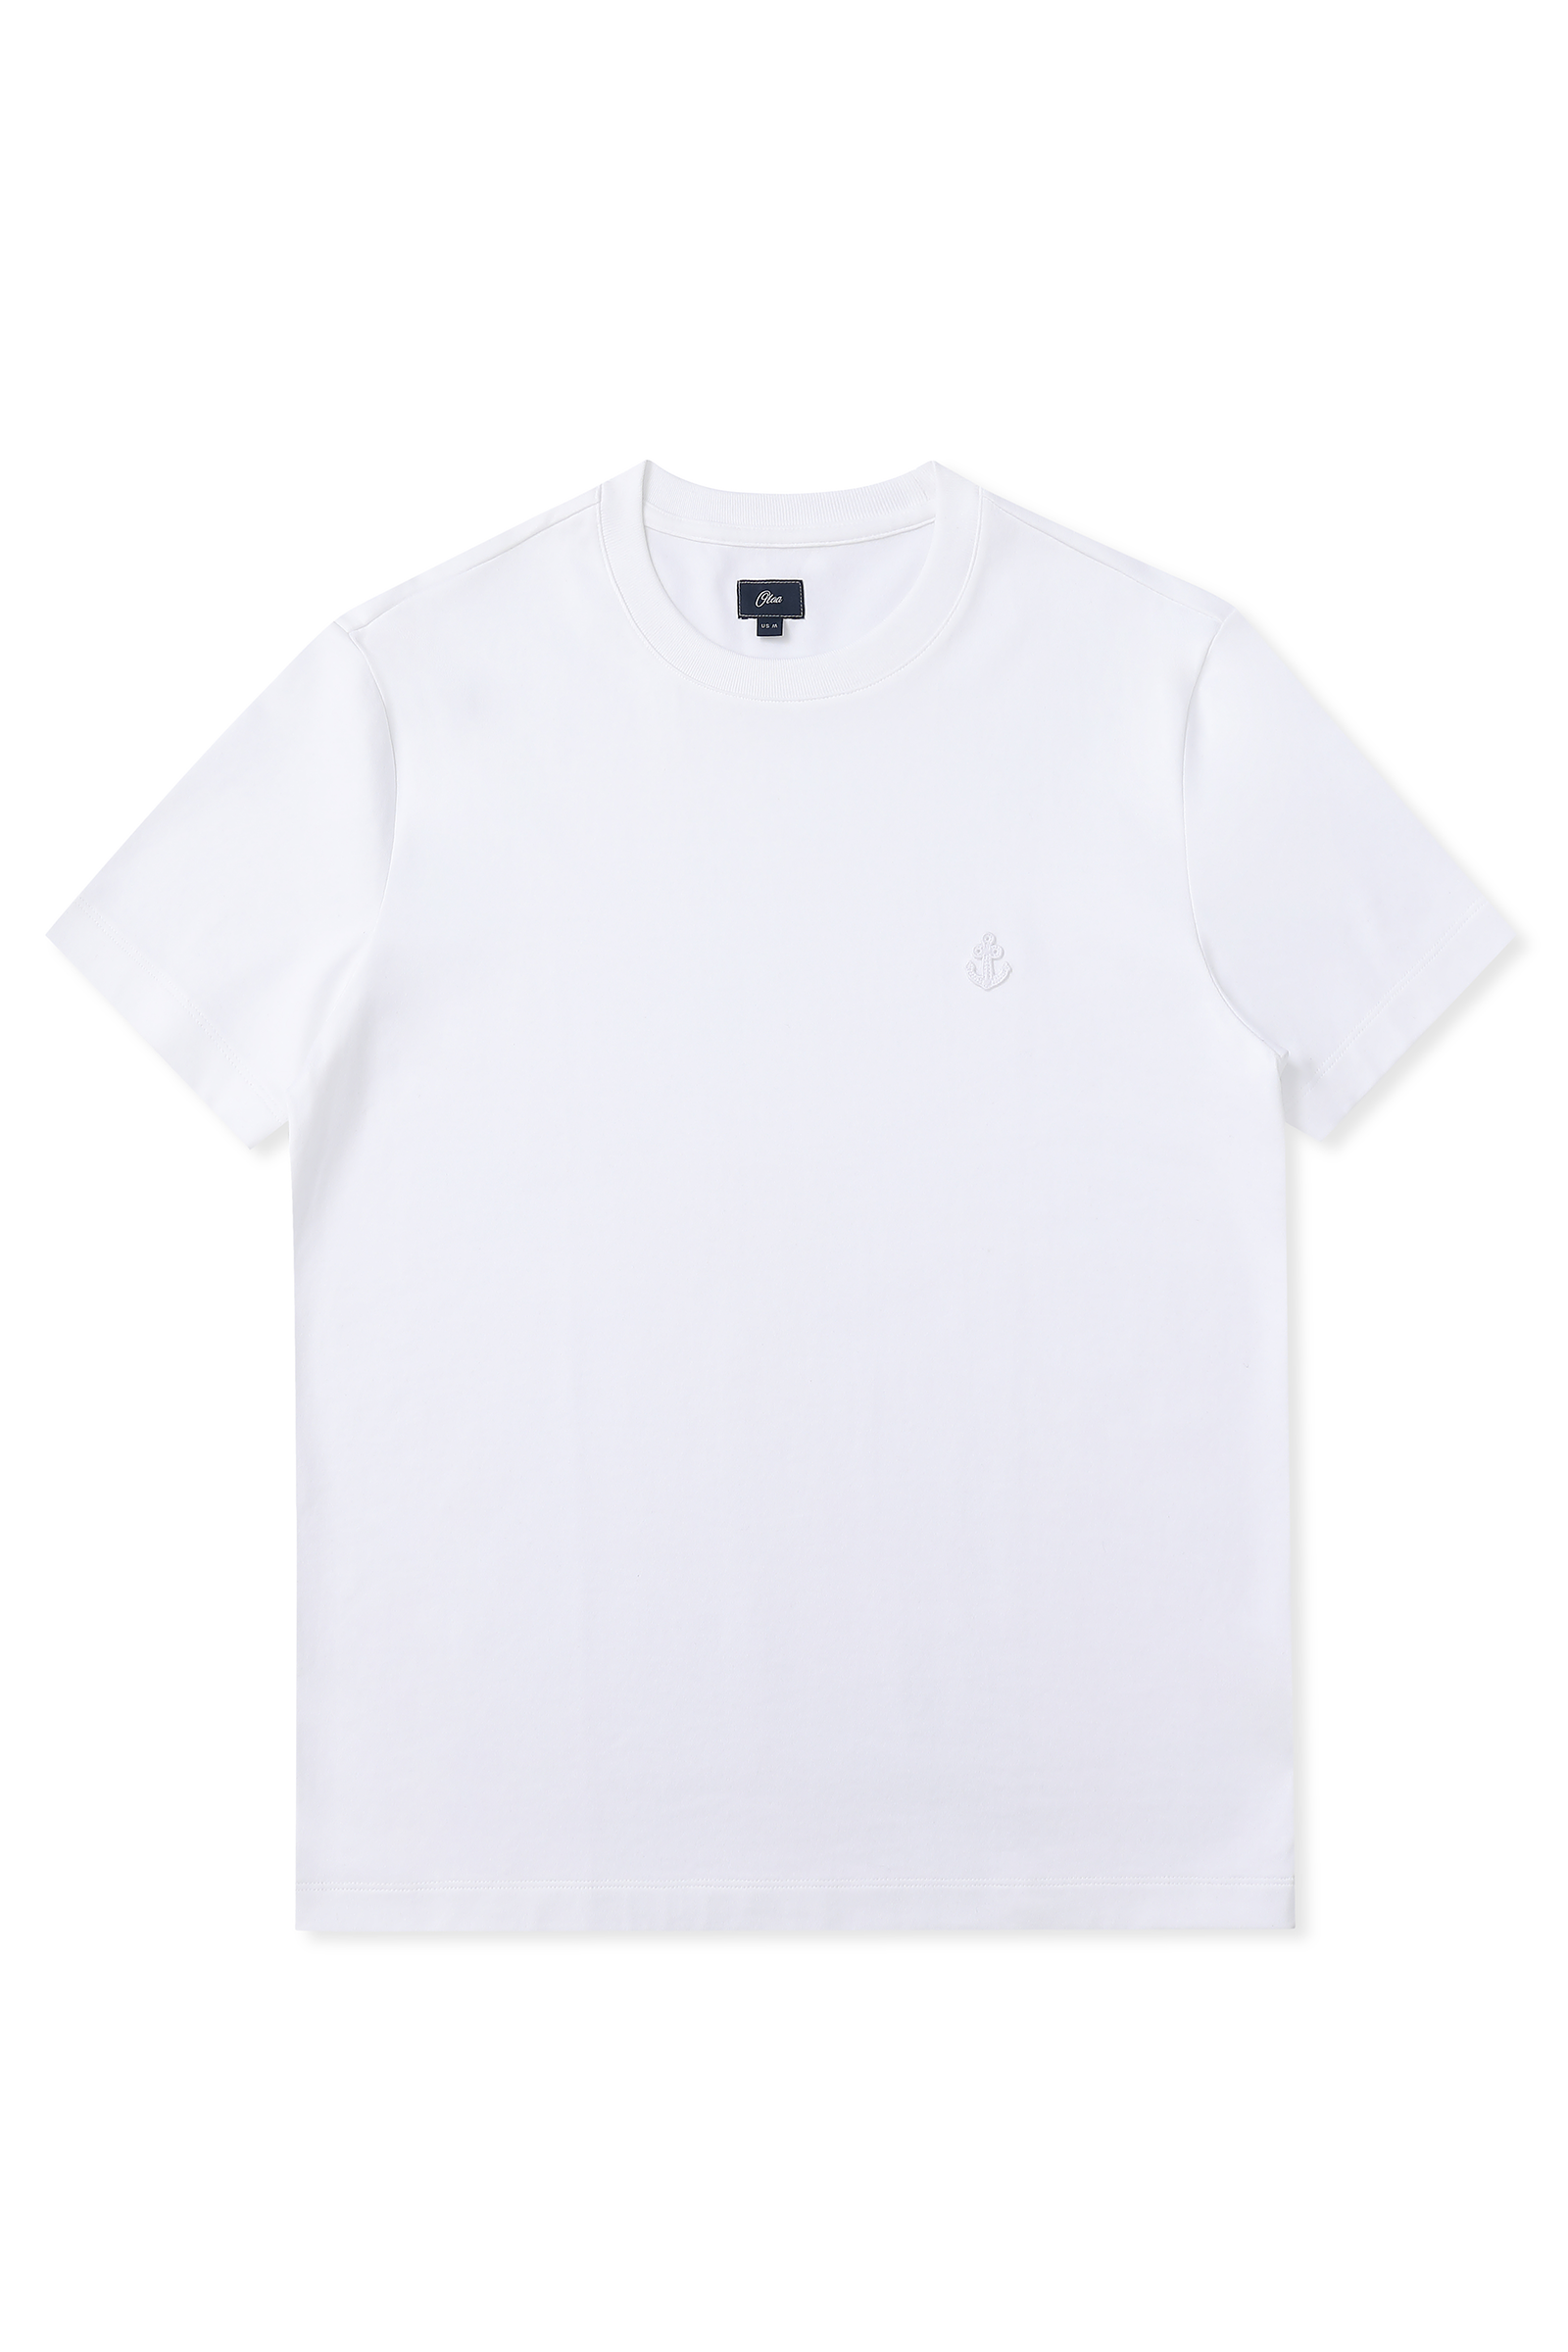 White Slim Fit T-Shirt